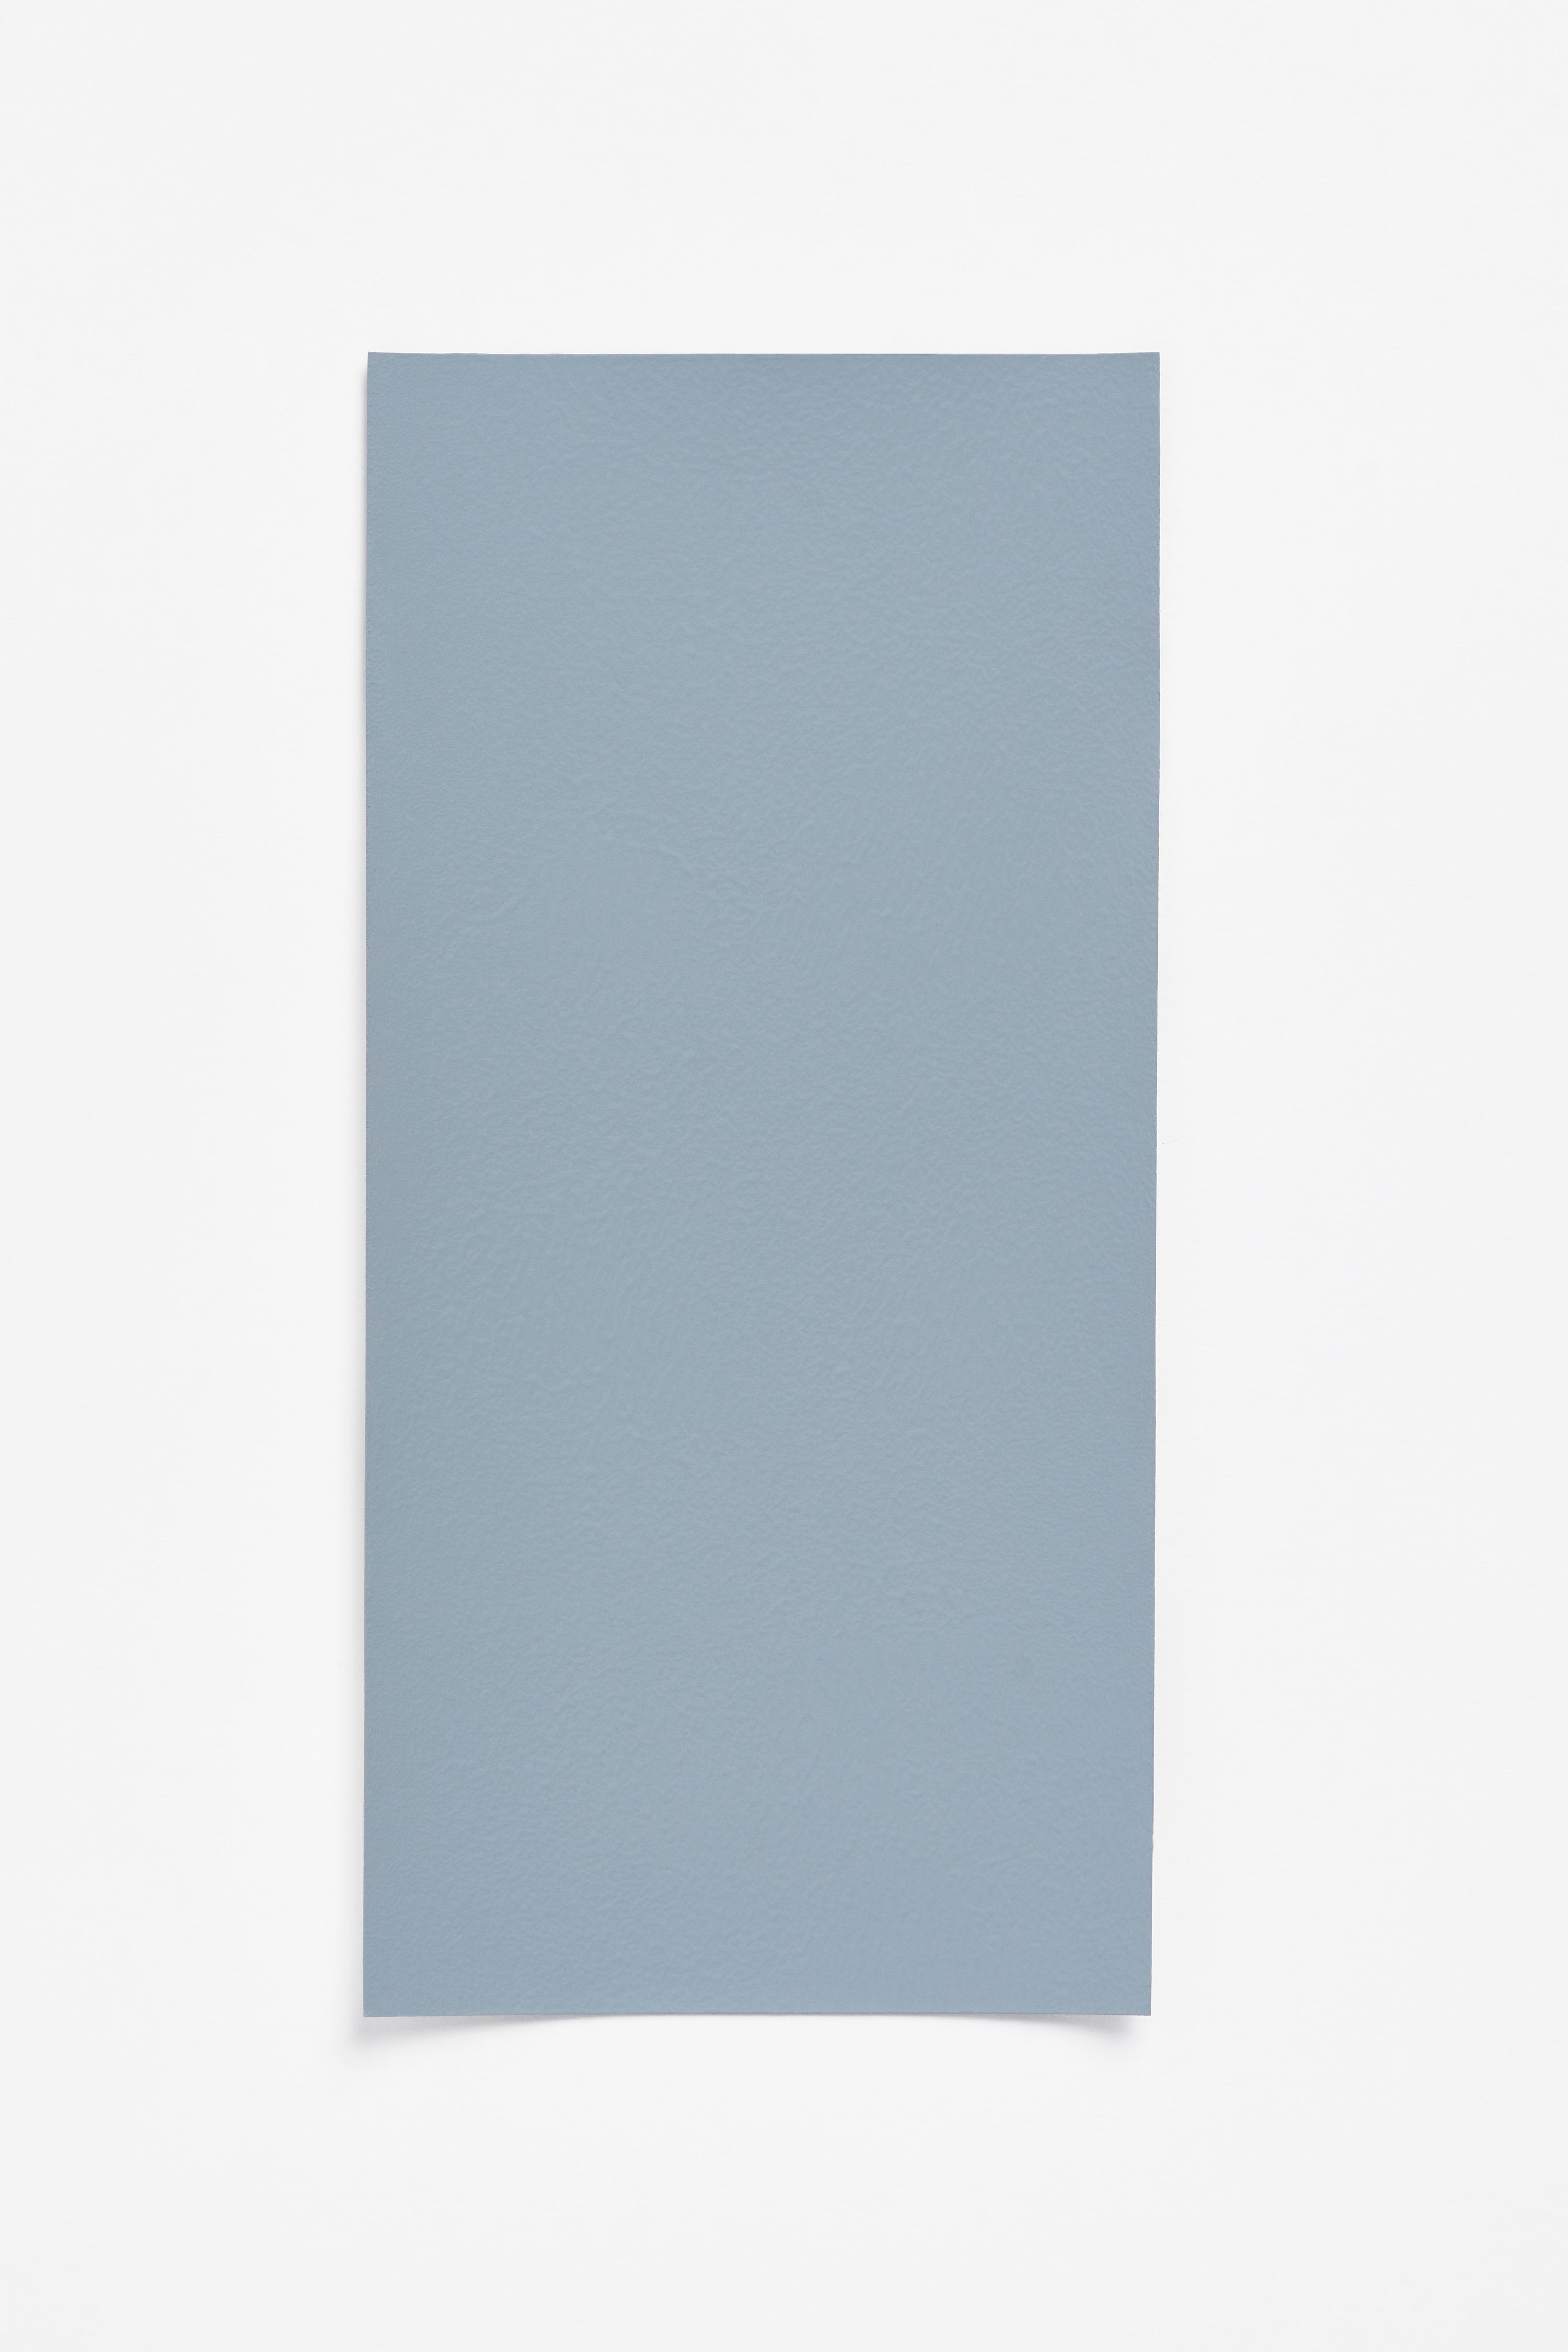 Gris Froid — a paint colour developed by Ronan Bouroullec for Blēo